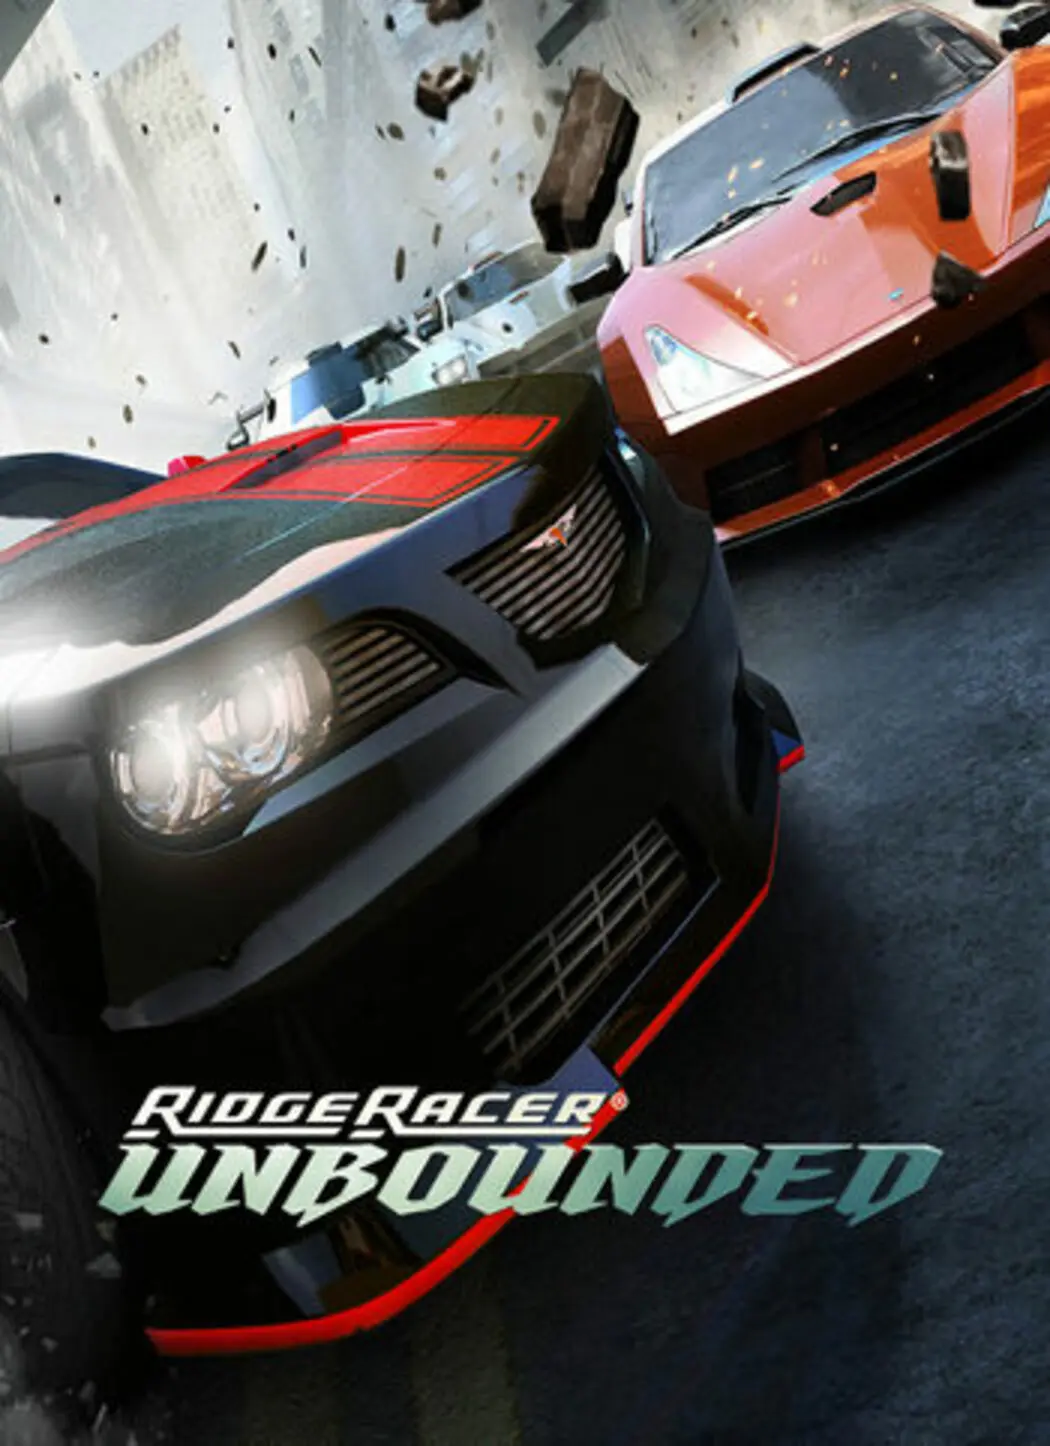 Ridge Racer Unbounded - Extended Pack: 3 Vehicles + 5 Paint Jobs DLC (EU) (PC) - Steam - Digital Code